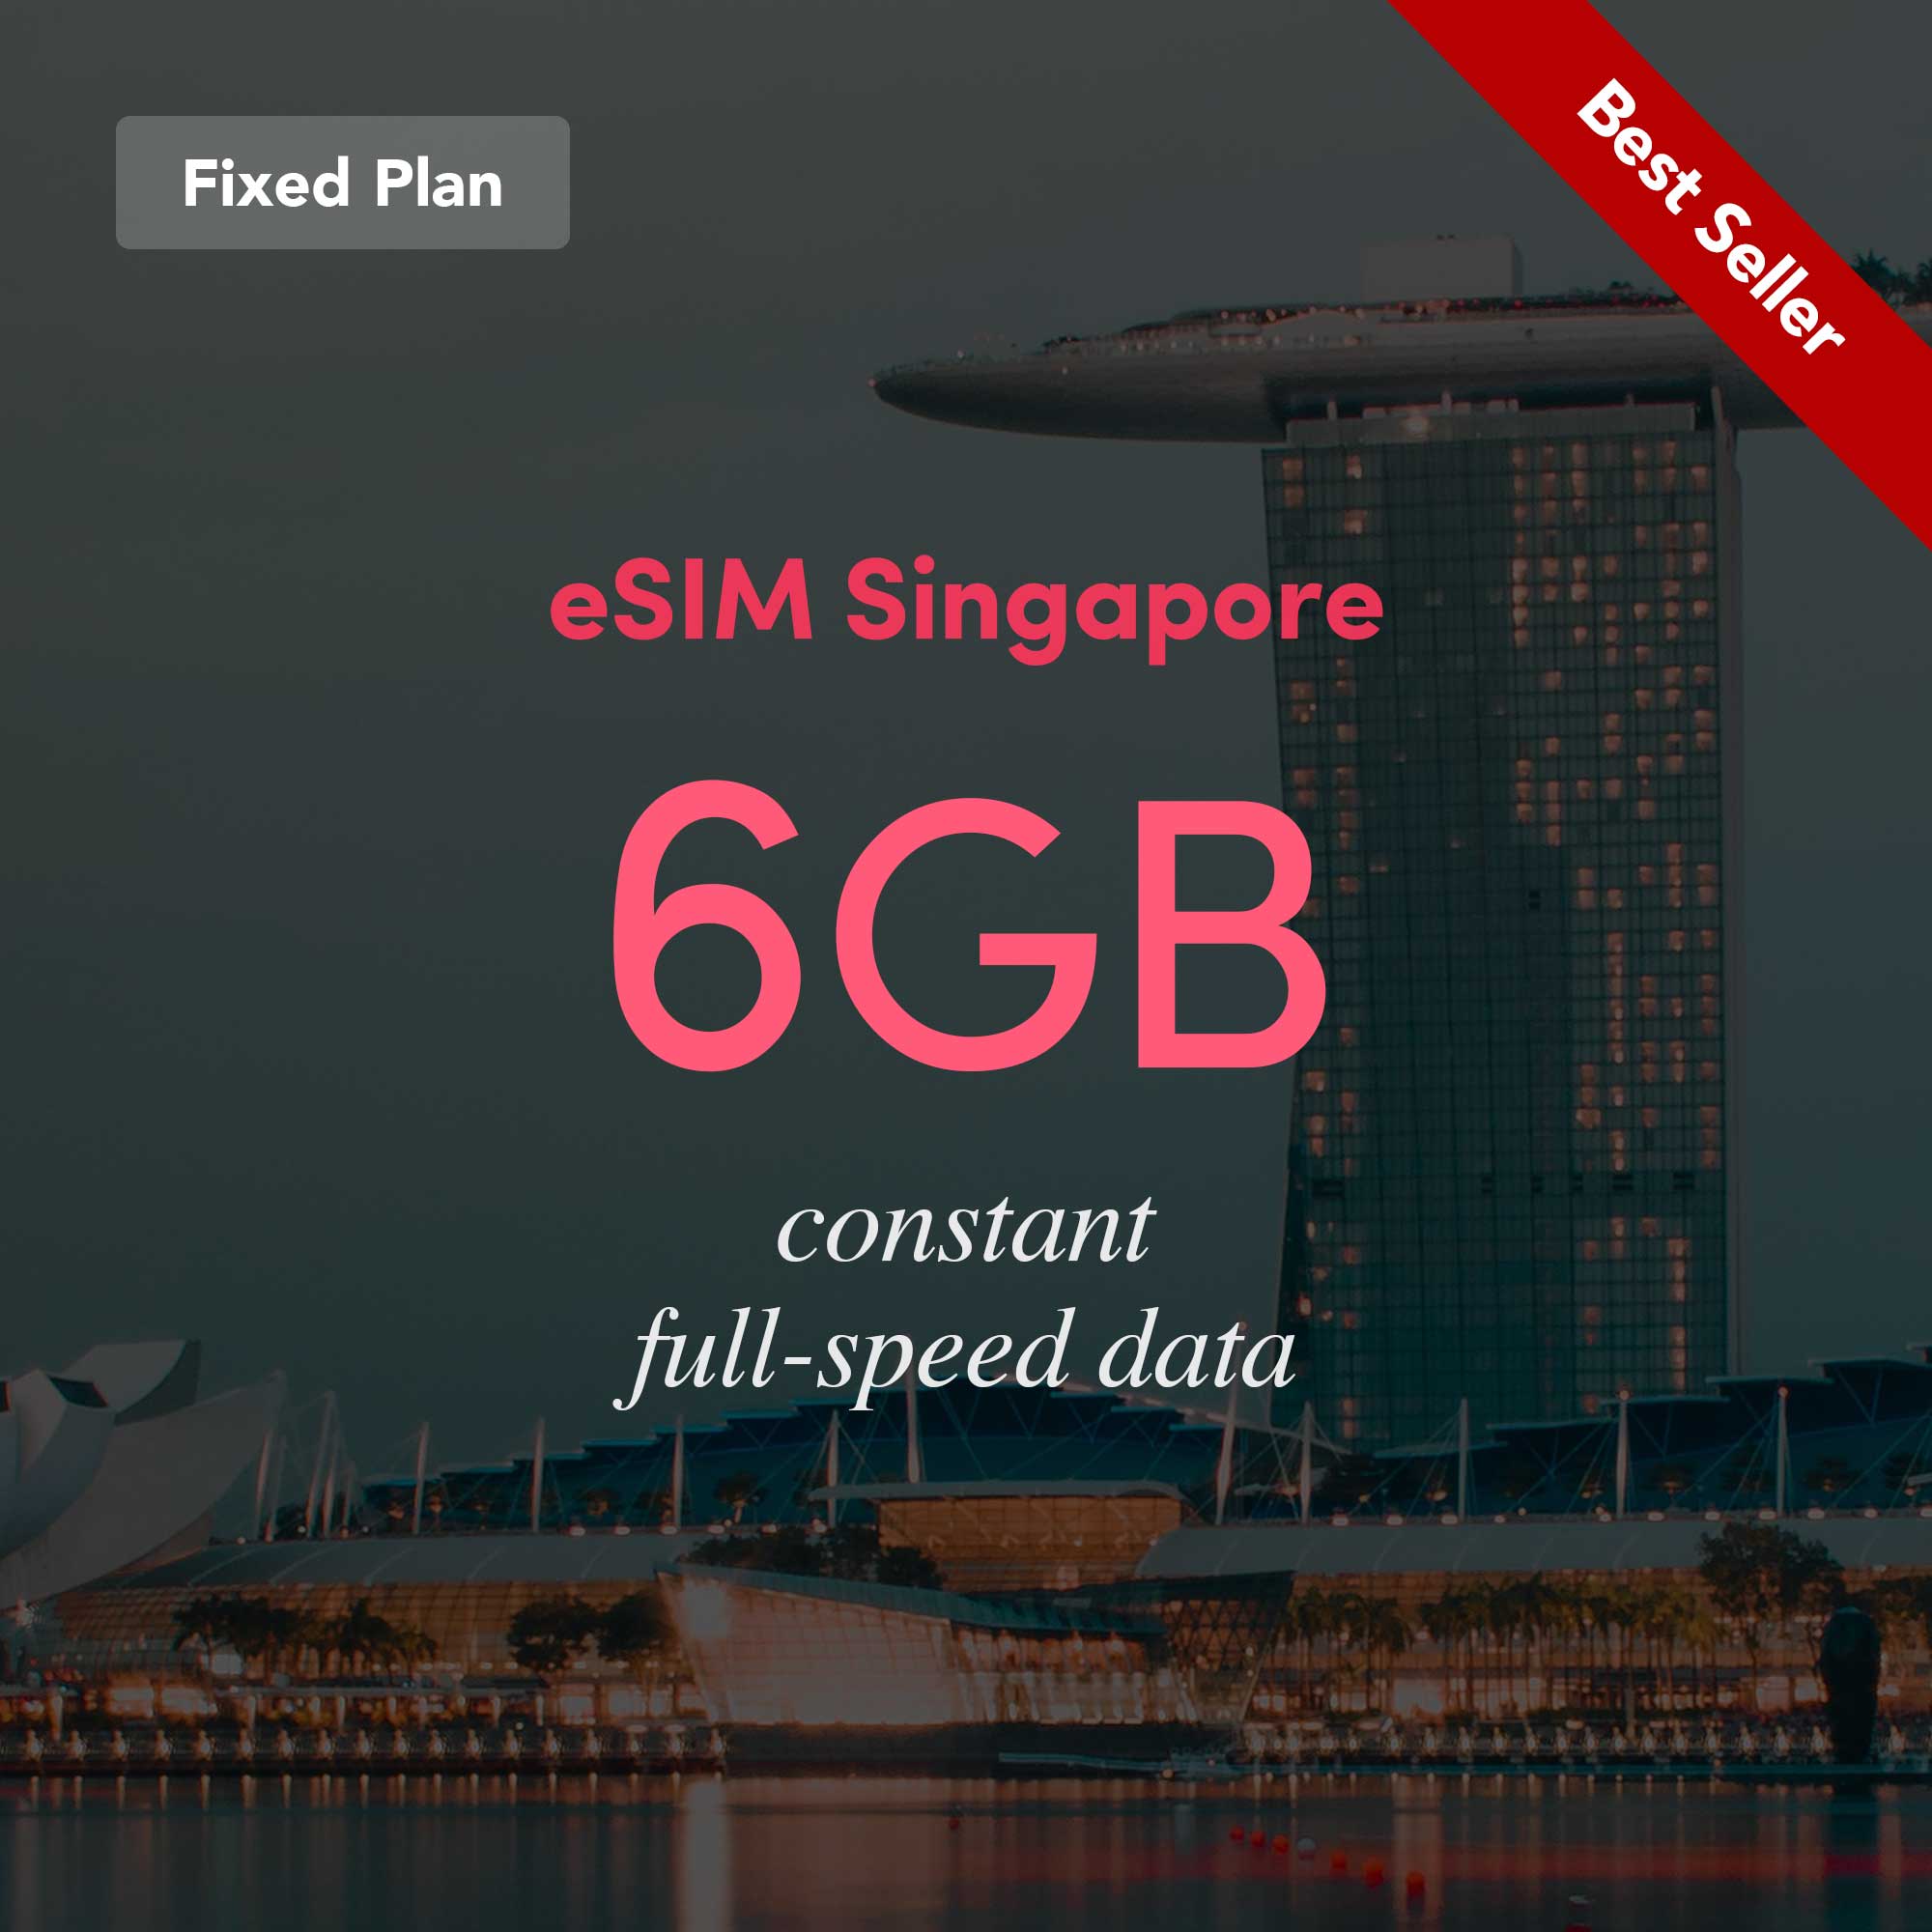 eSIM Singapore Fixed Plan 6GB